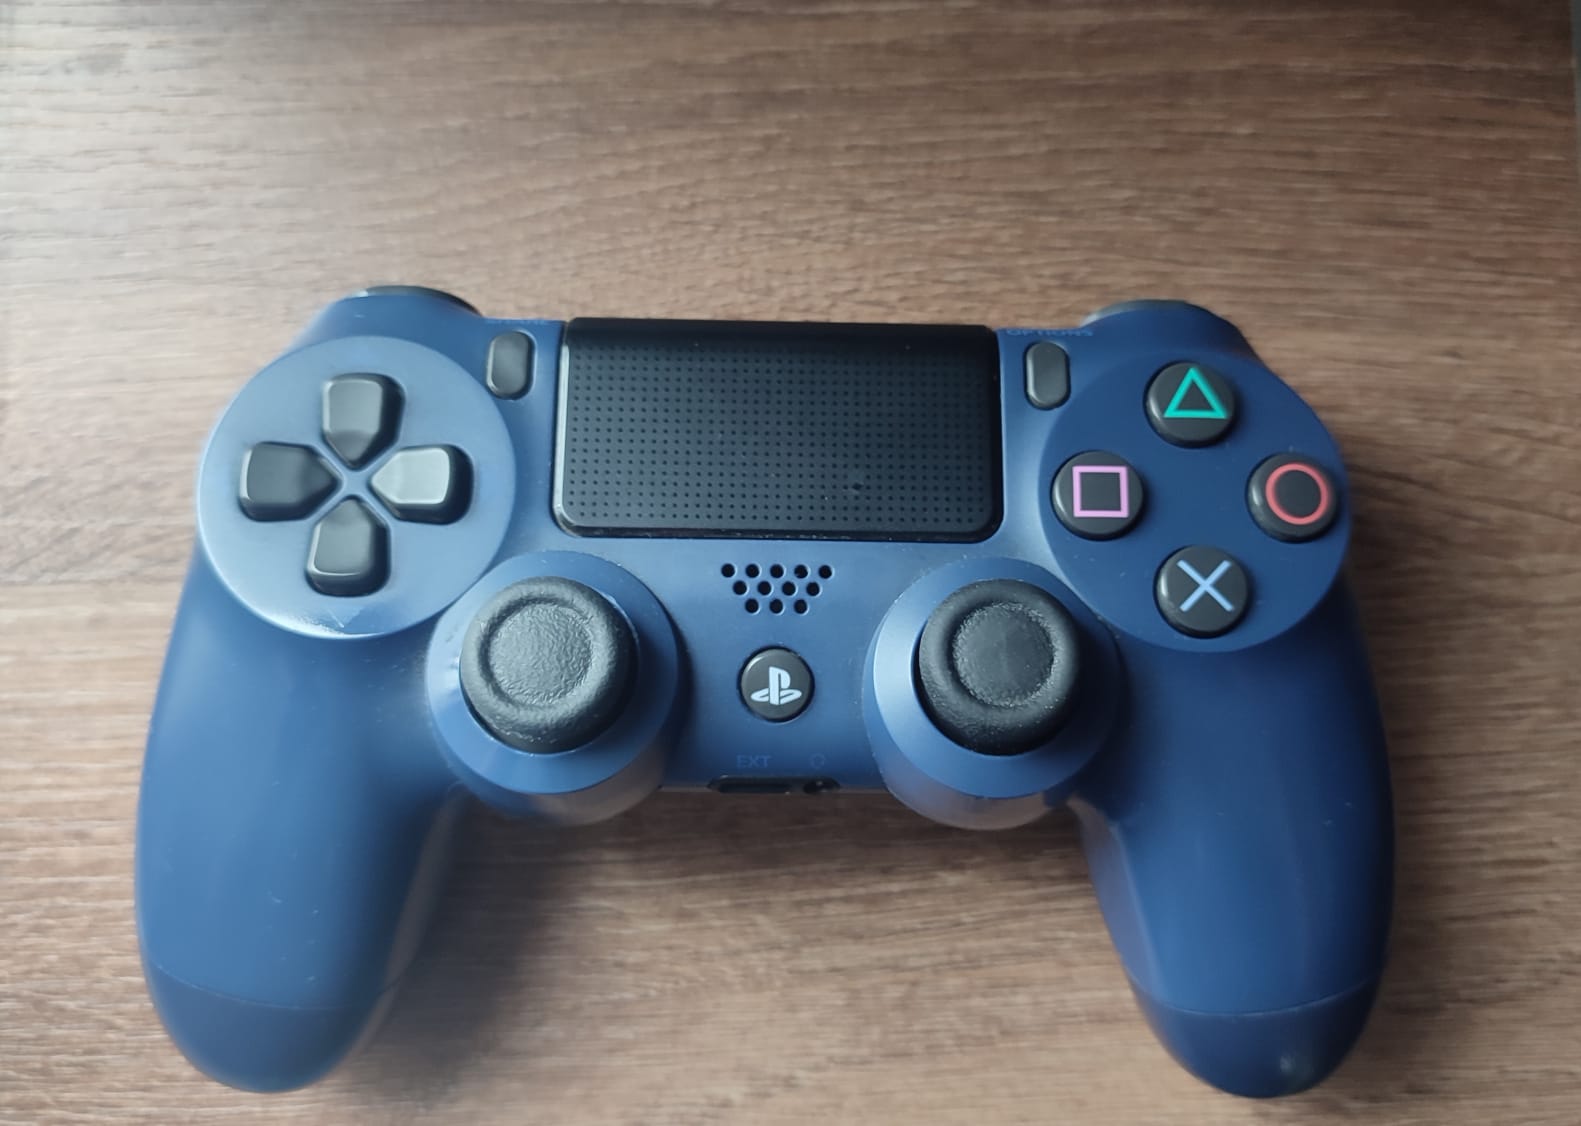 Mando PS4 Original Nuevo V2 Azul - Caja Sellada SONY